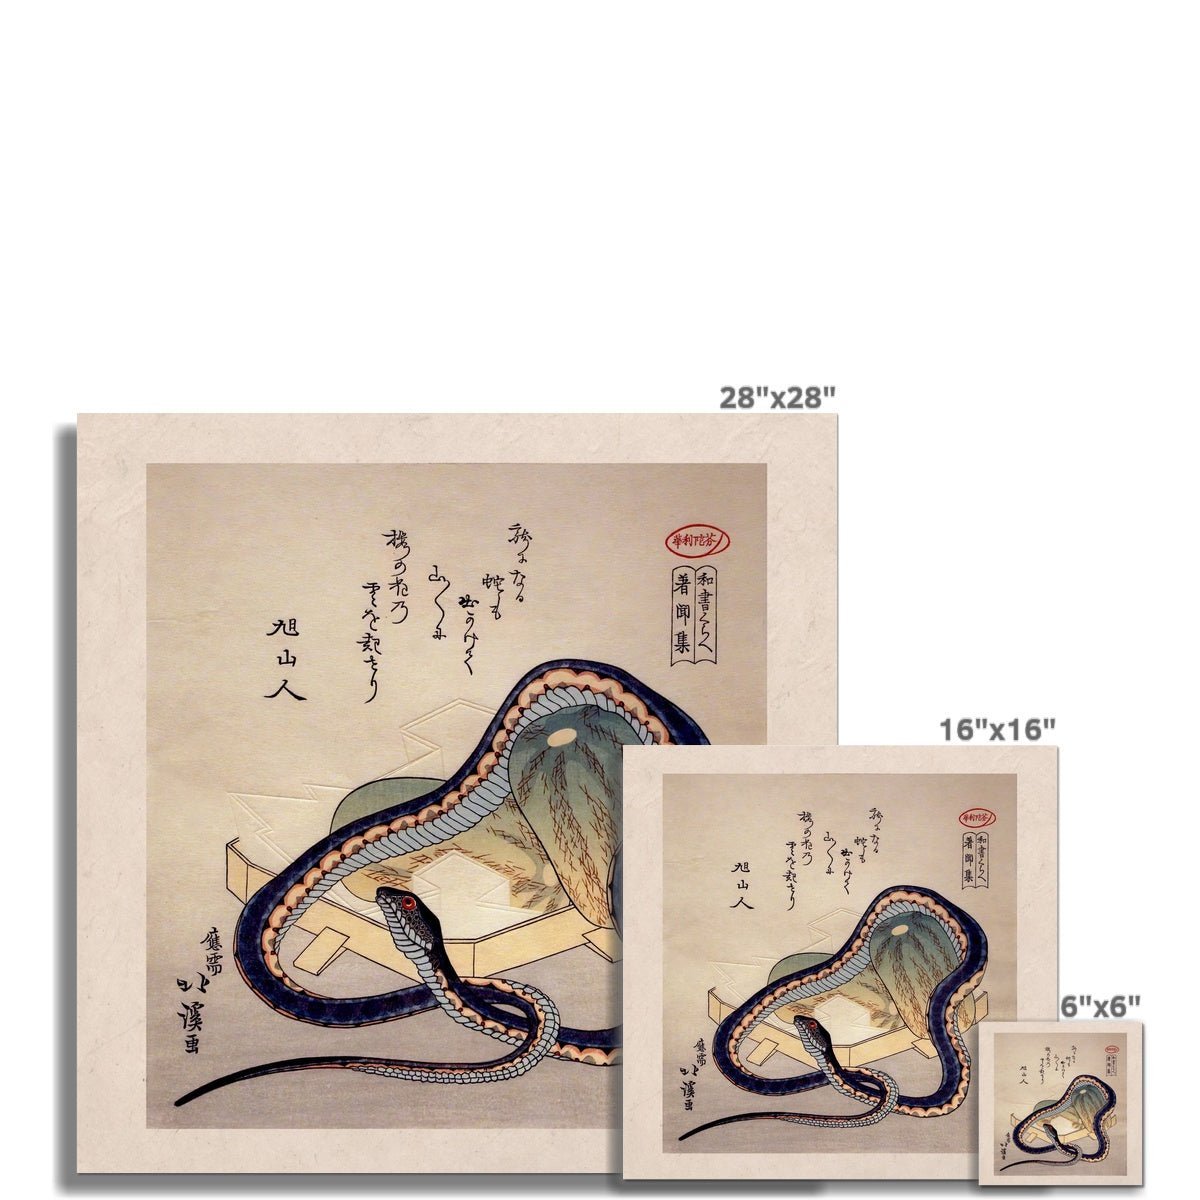 giclee 6"x6" Snake and Melon (Totoya Hokkei) Antique Japanese Ukiyo-e Folklore Serpent Woodblock Pastel Edo Period Vintage Fine Art Print